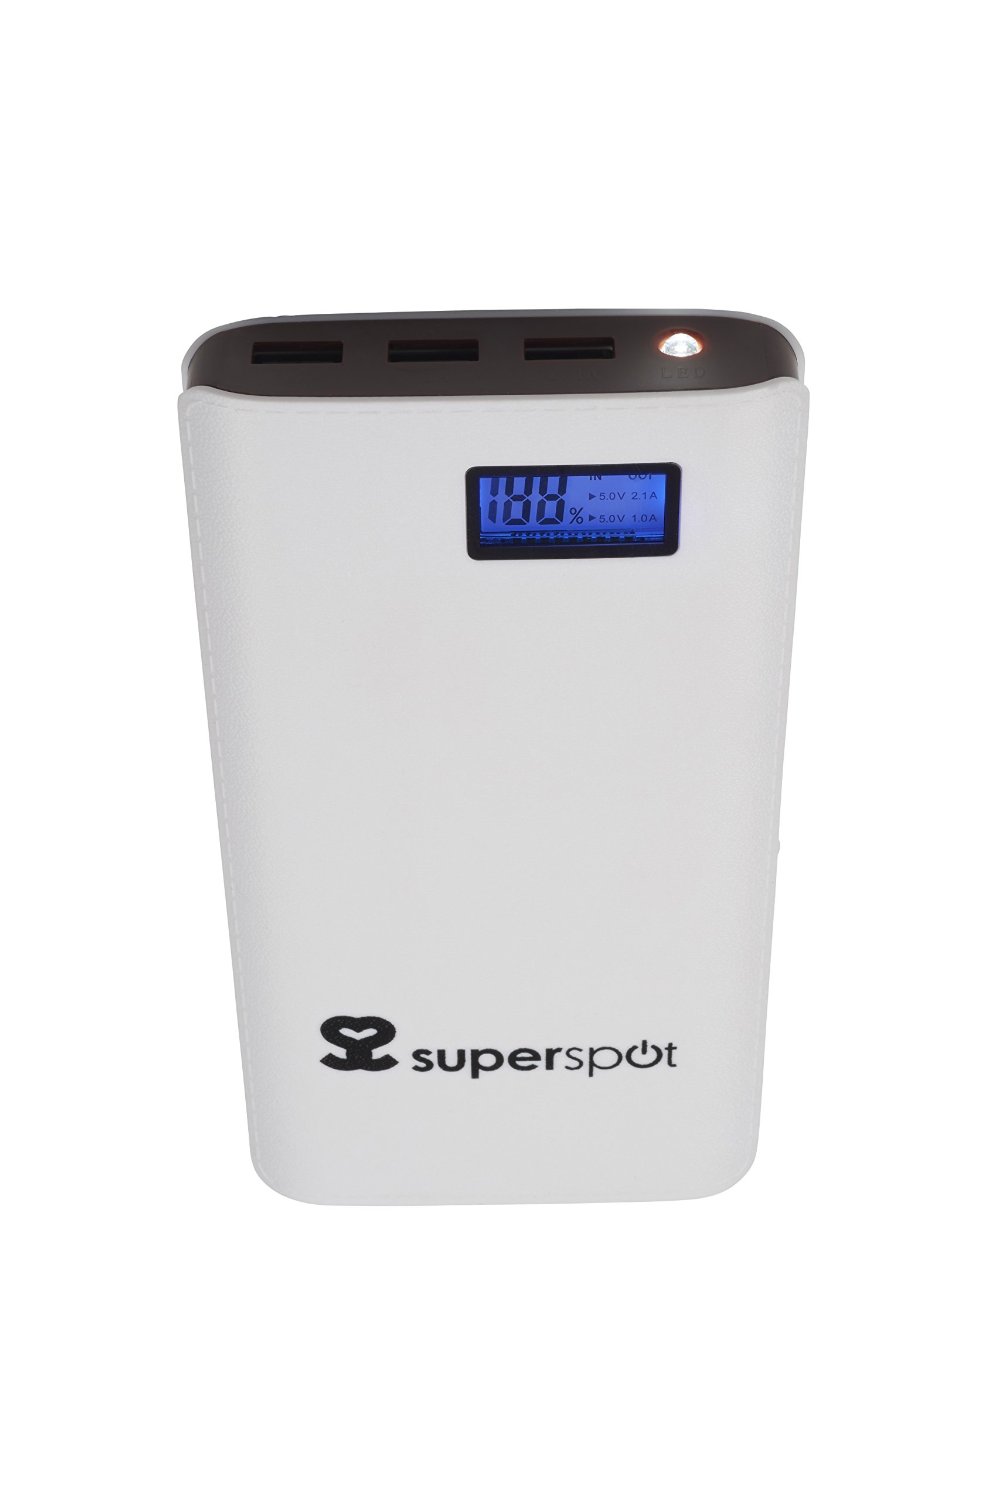 SuperSpot Executive 20800 mAh Powerbank- White